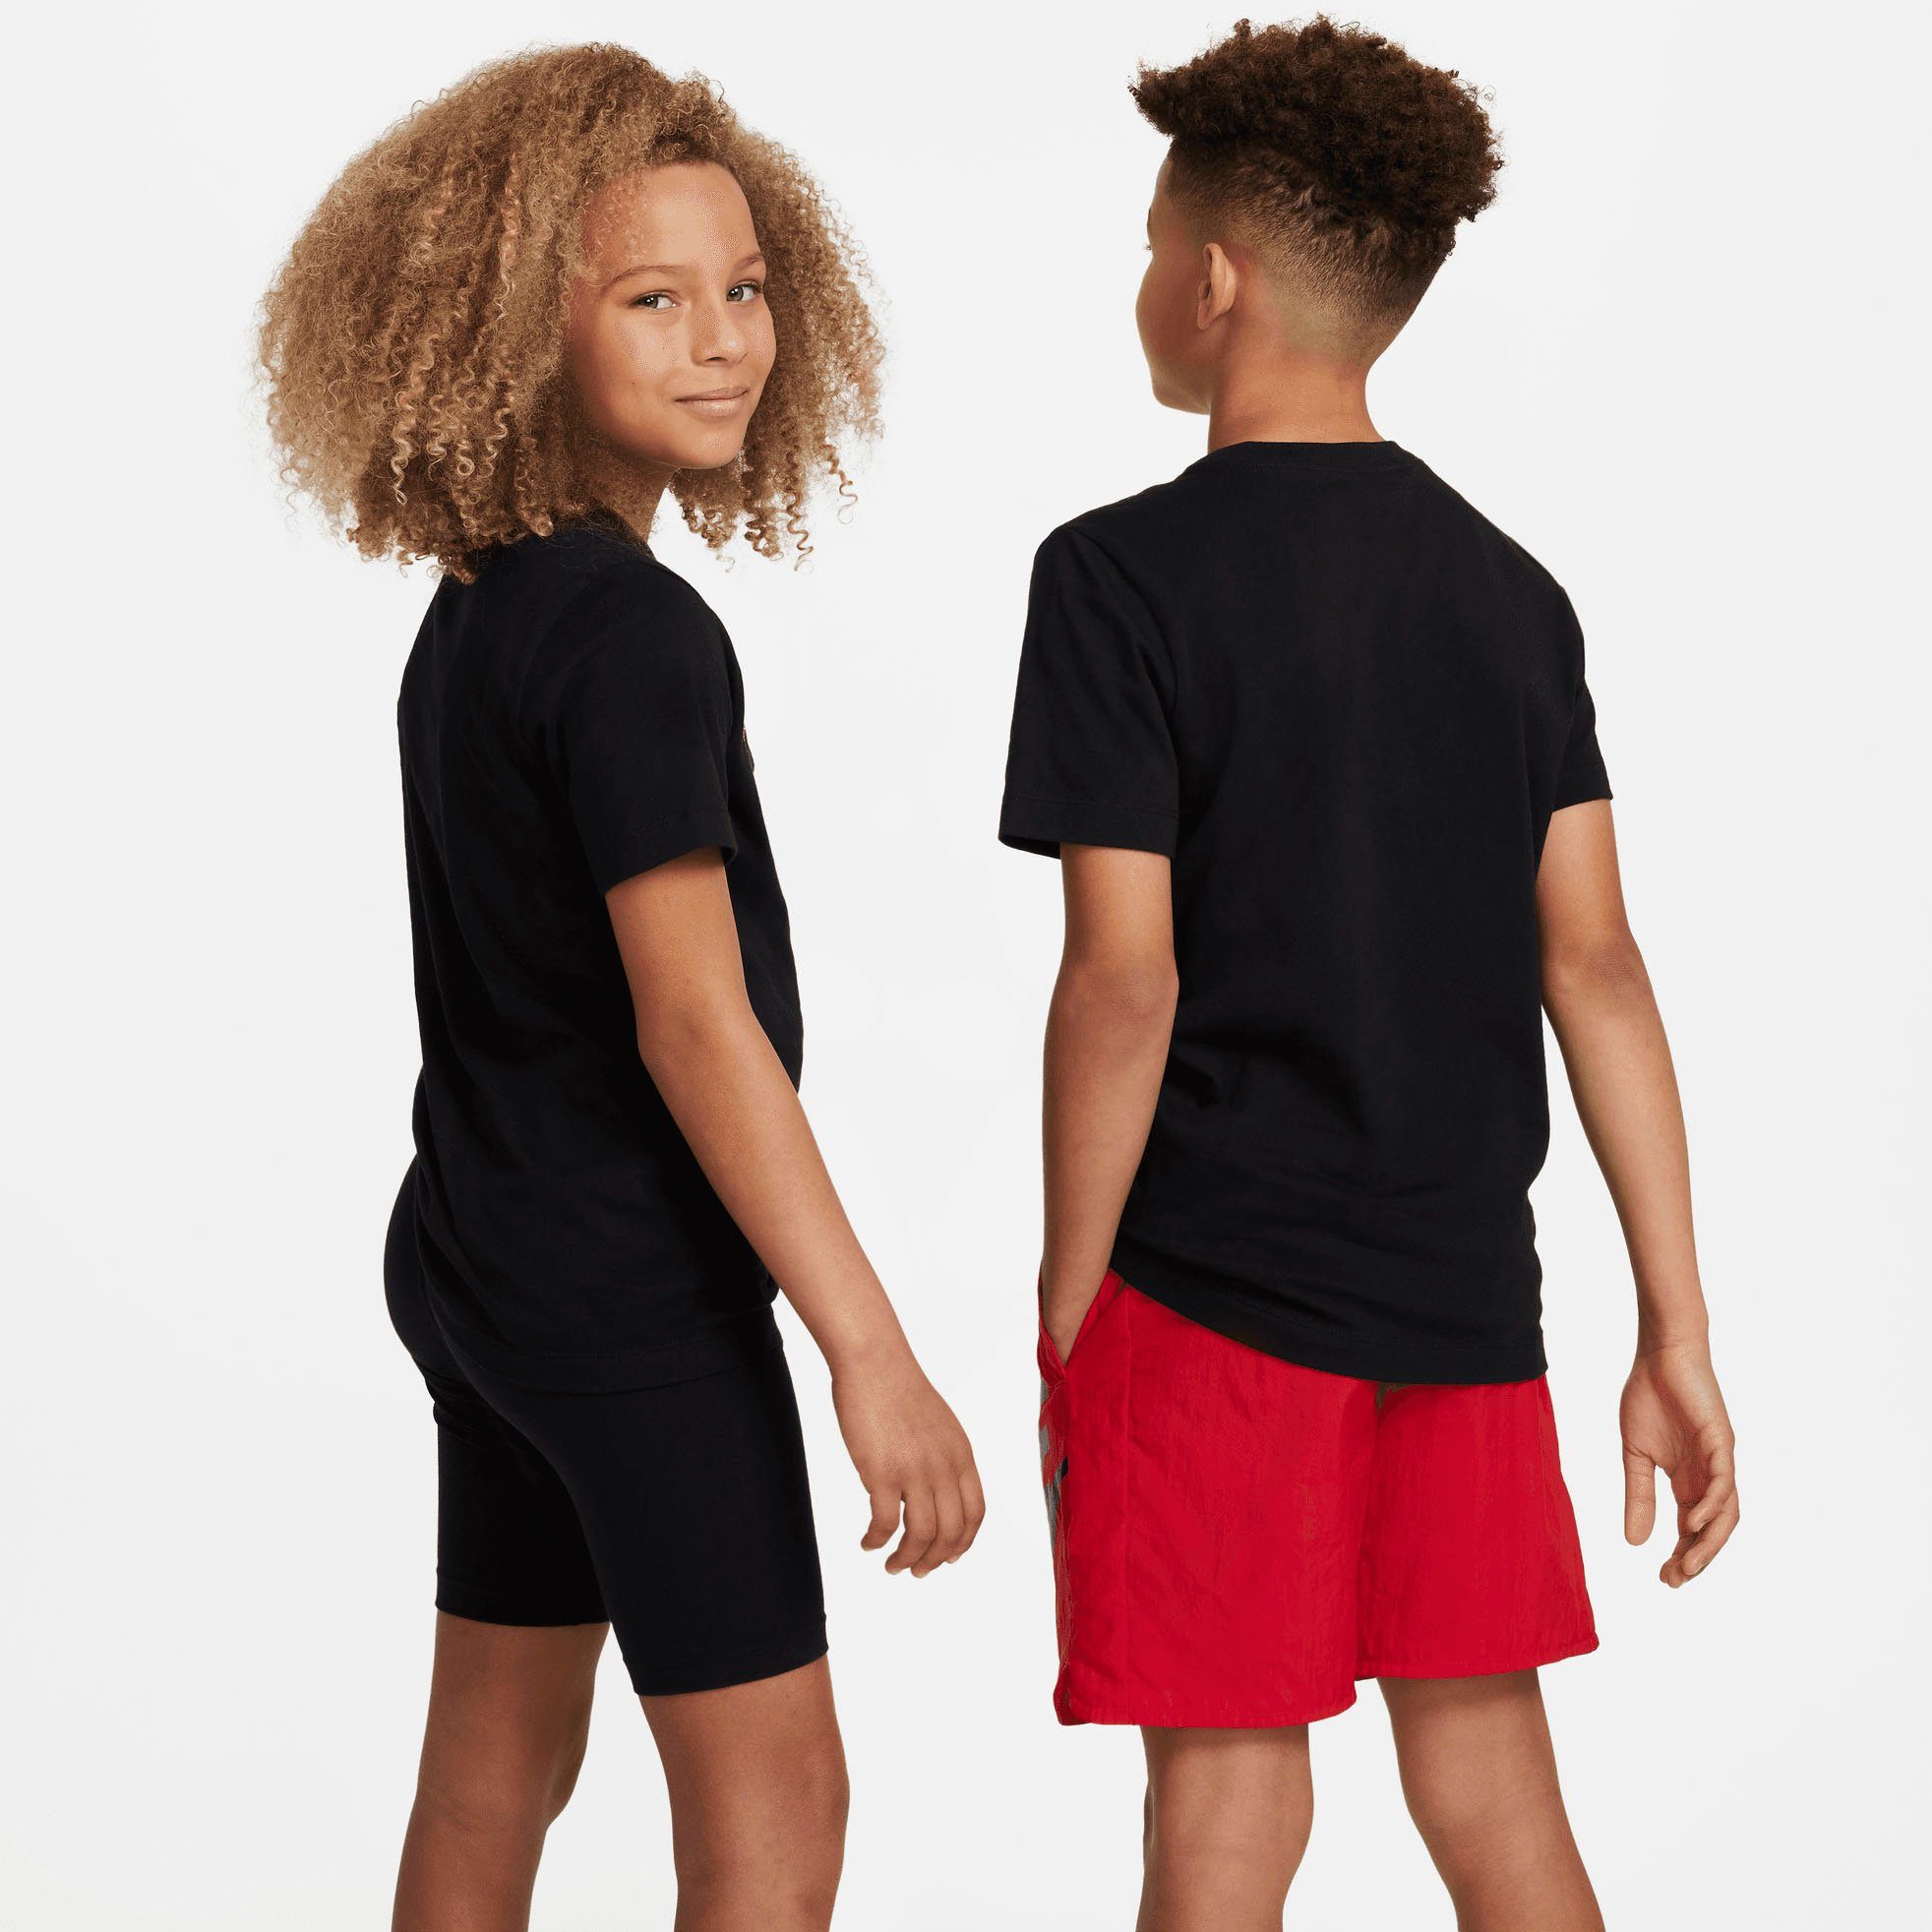 T-Shirt Kids' Big schwarz Sportswear T-Shirt Nike